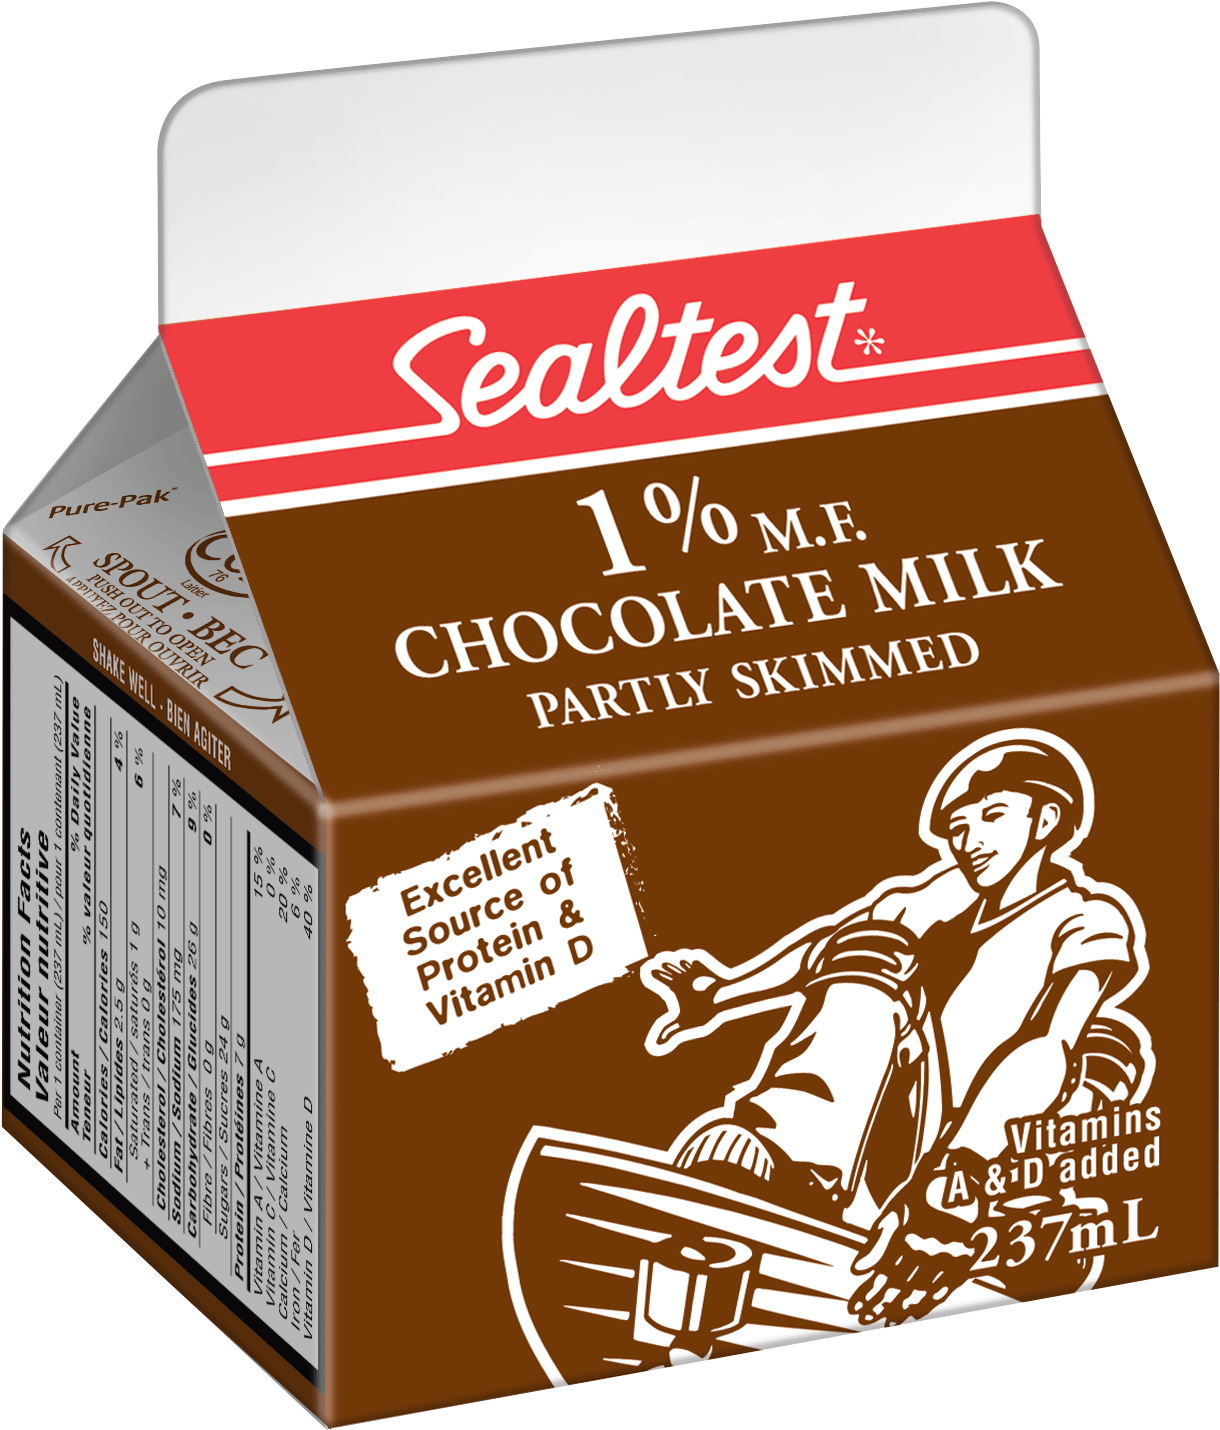 Chocolate Milk Carton Sealtest1 Percent PNG